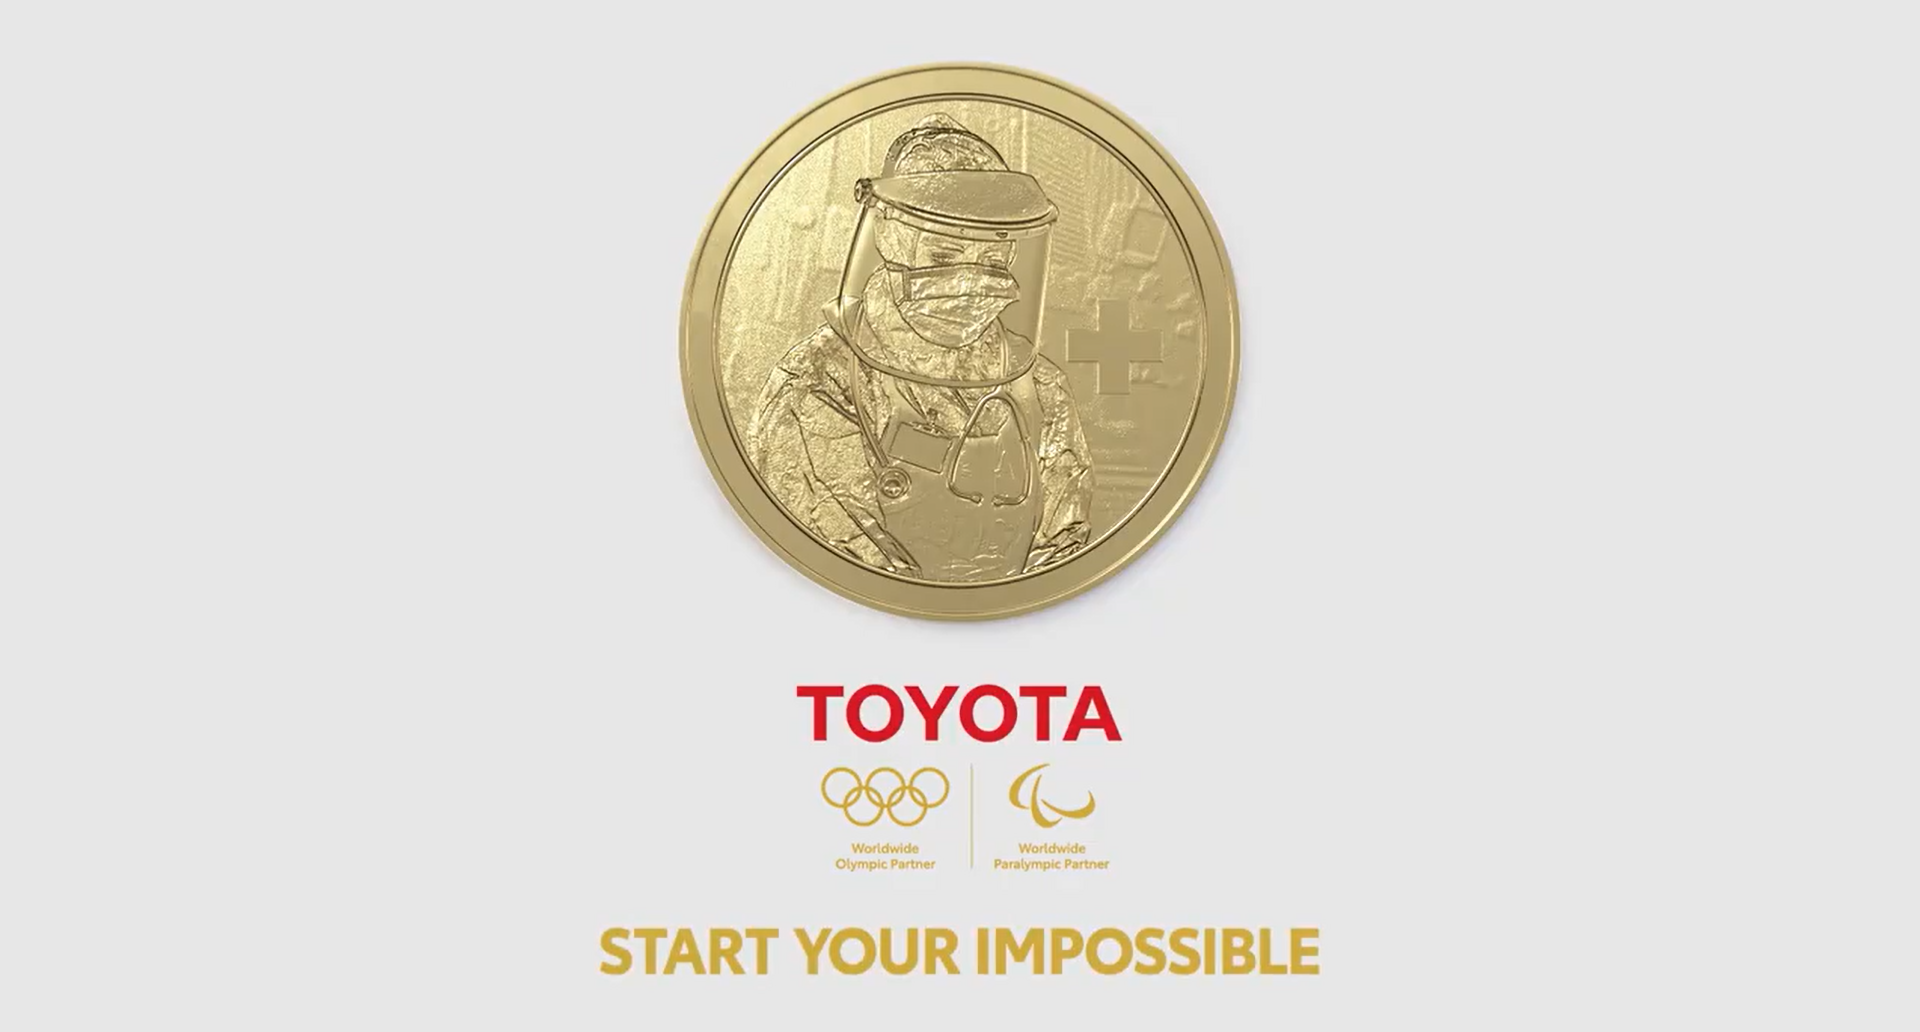 Olympic sponsor Toyota highlight everyday heroes in "Heroic Medal" advert